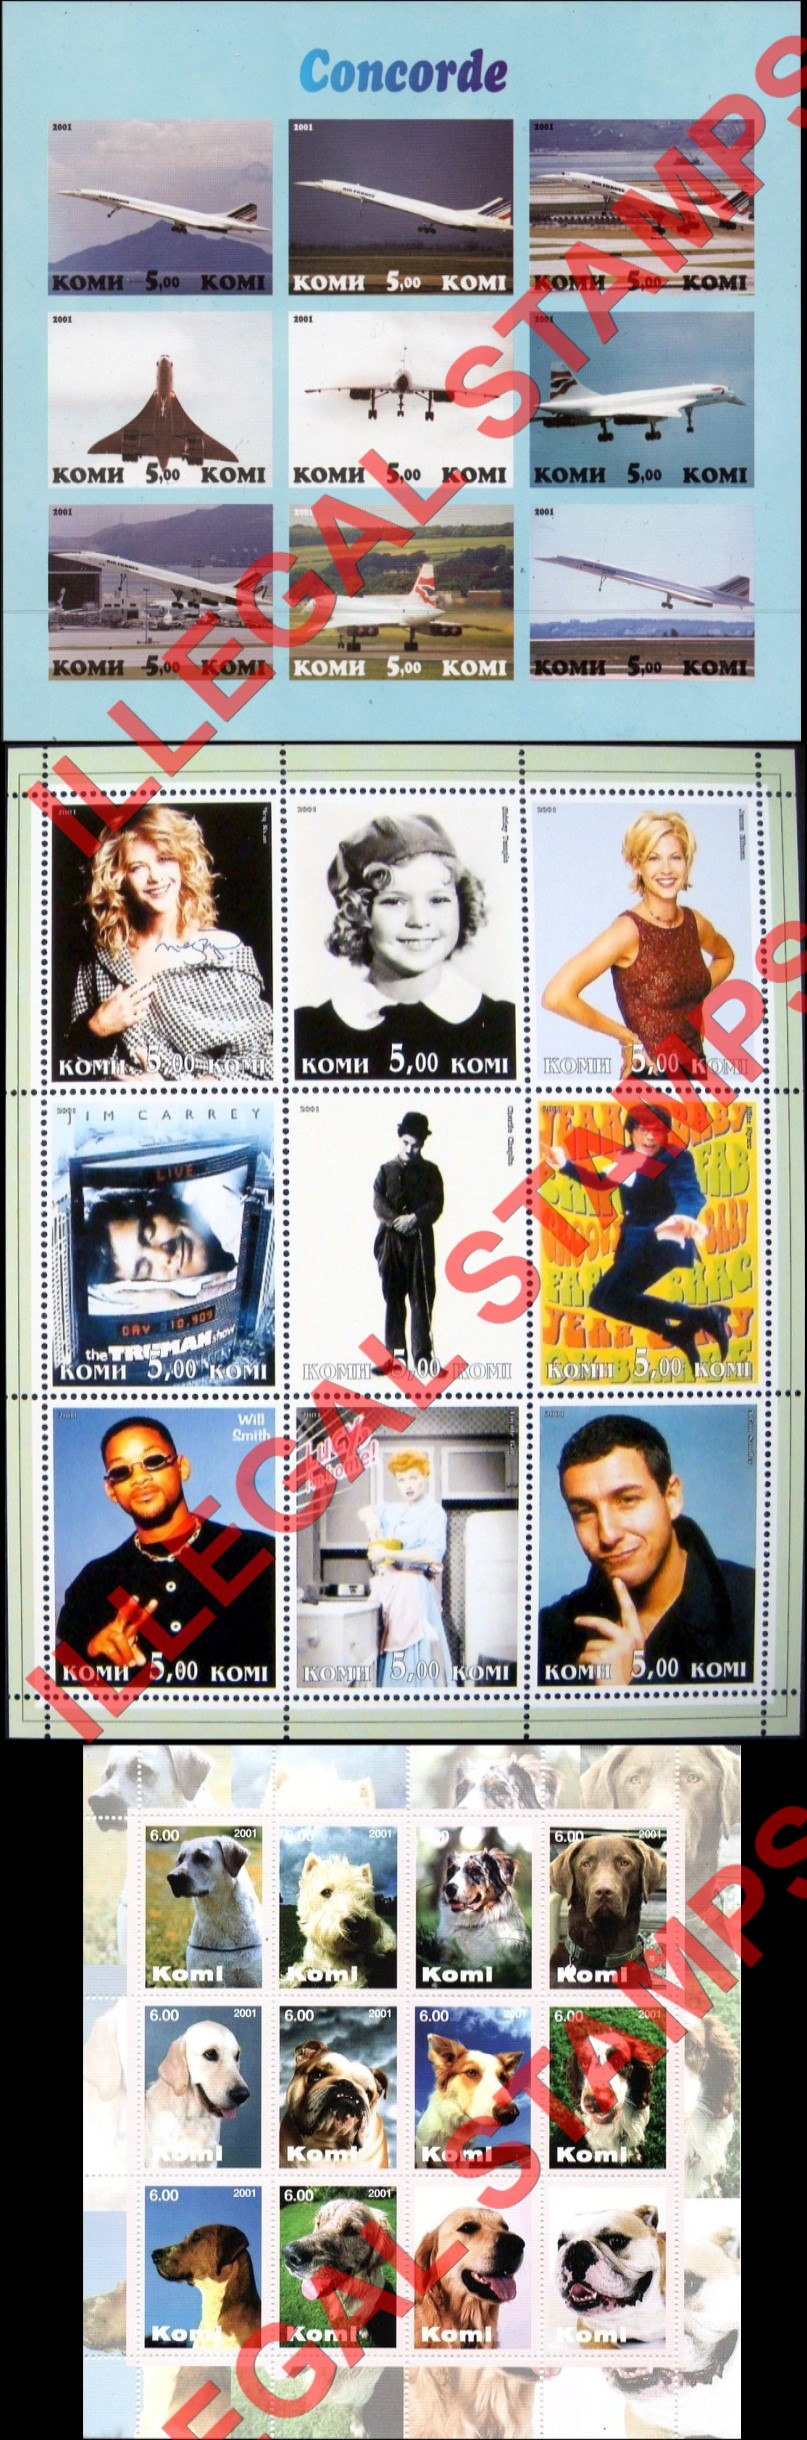 Komi Republic 2001 Counterfeit Illegal Stamps (Part 1)